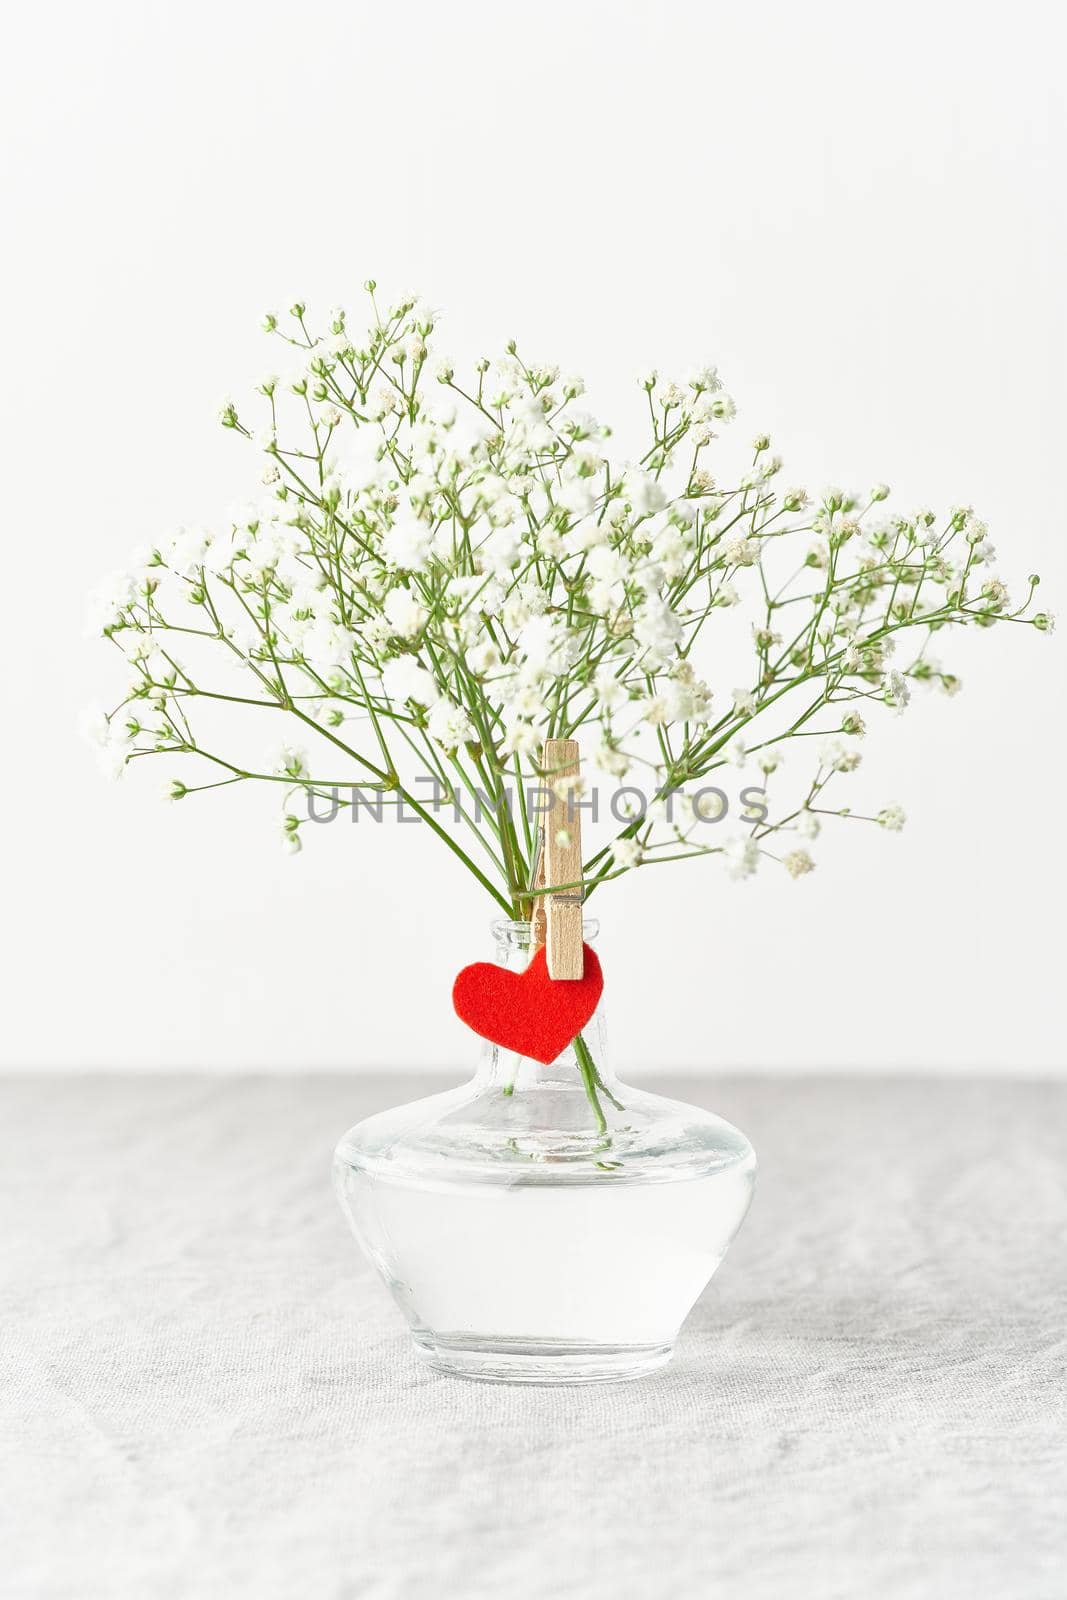 Valentine's Day. Delicate white flowers in vase. Red felt heart - symbol of love by NataBene